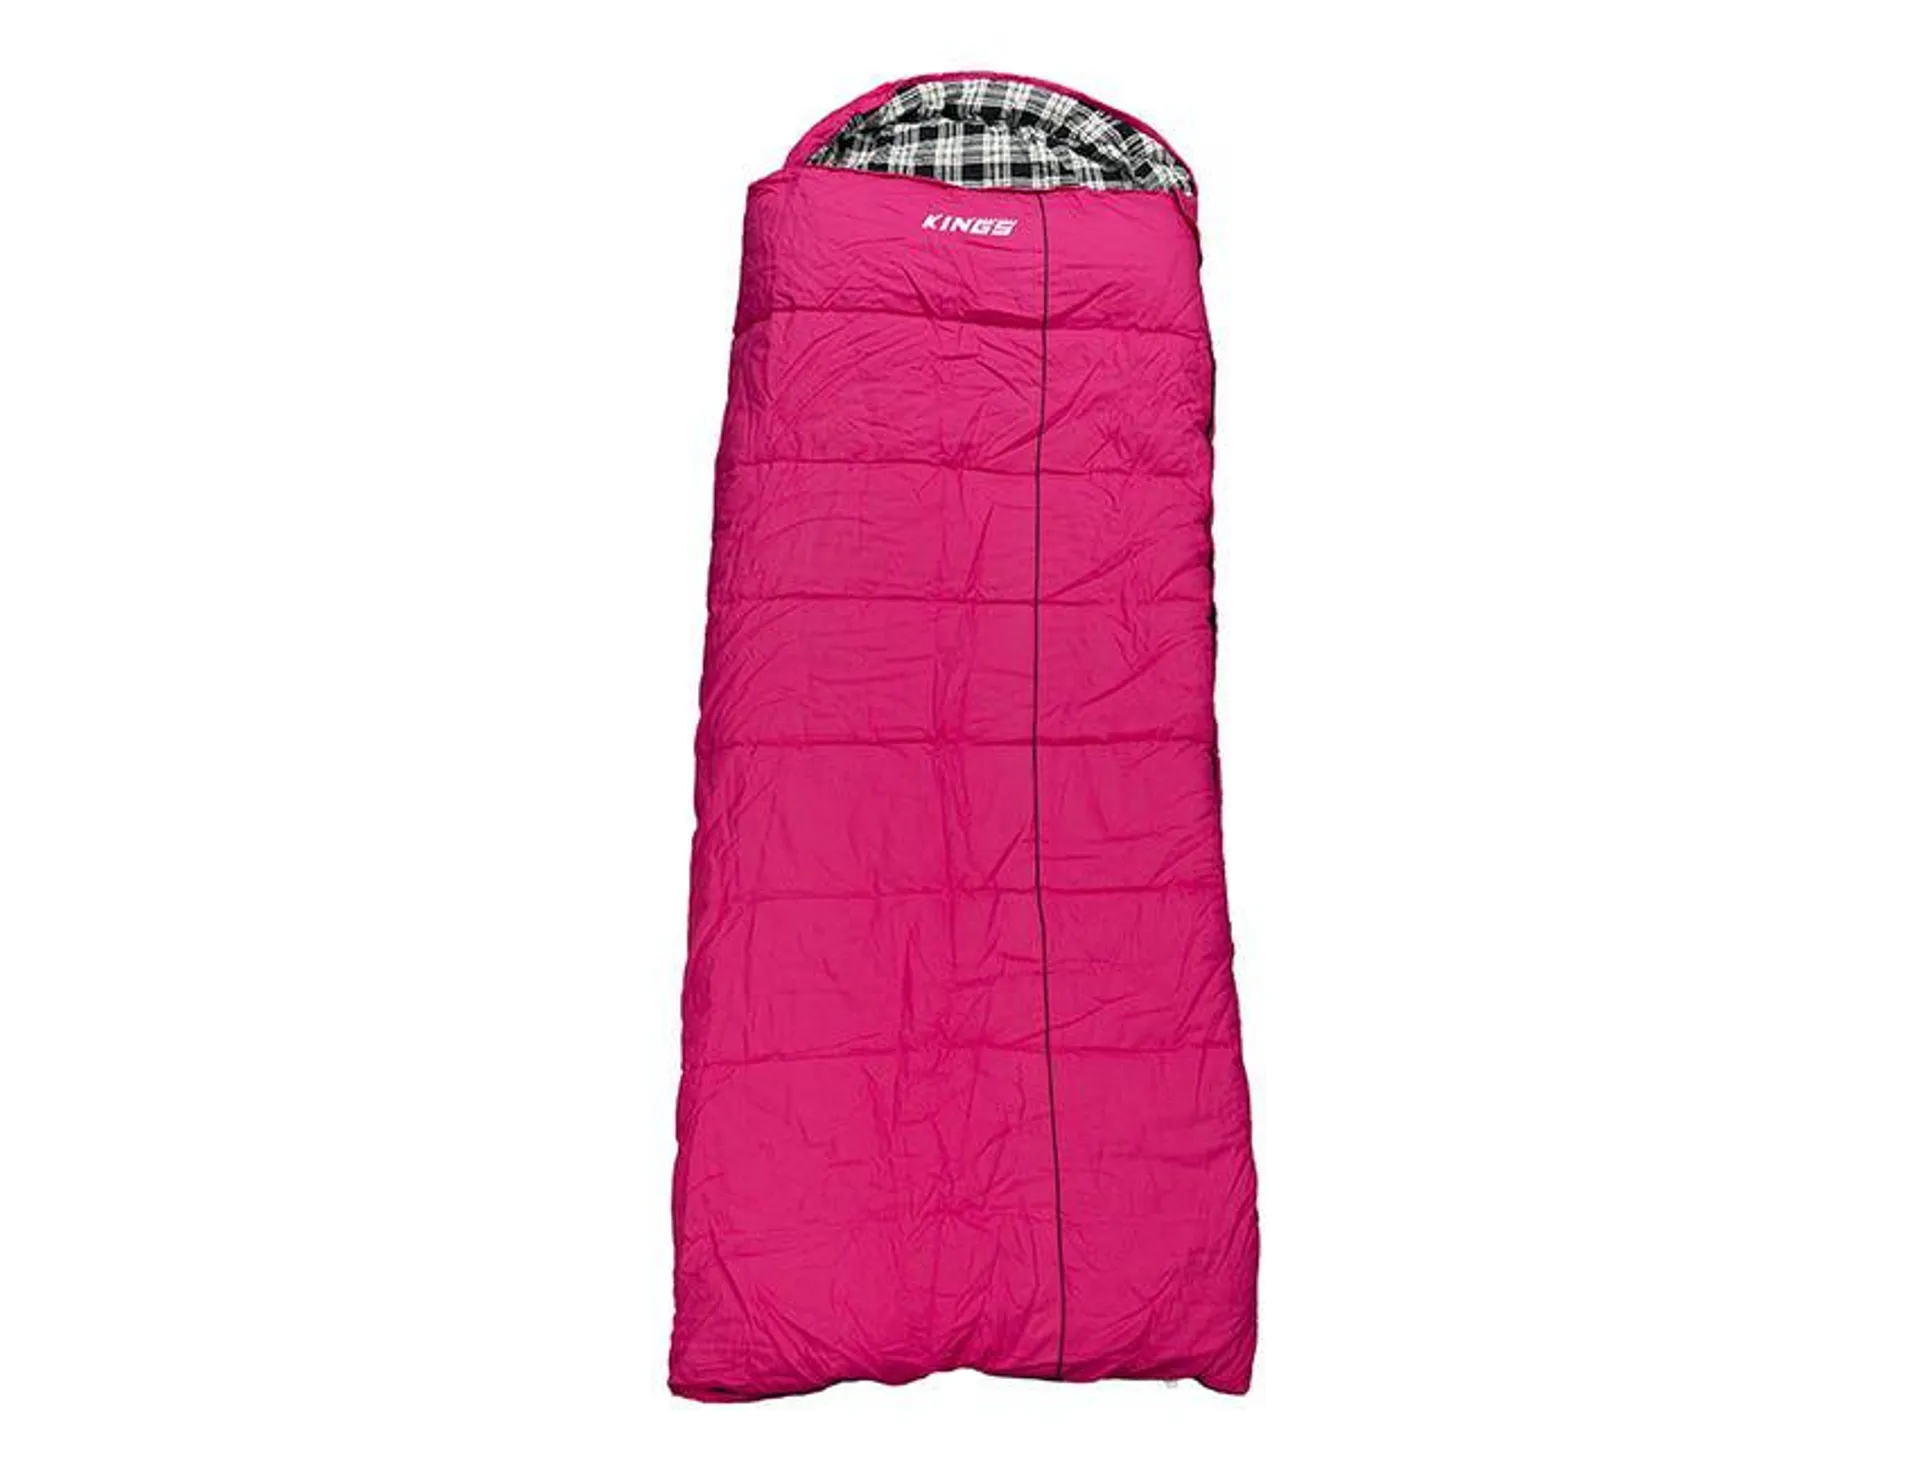 Kings PINK Premium Winter/Summer Sleeping Bag |-5°C to +5°C | Left zipper